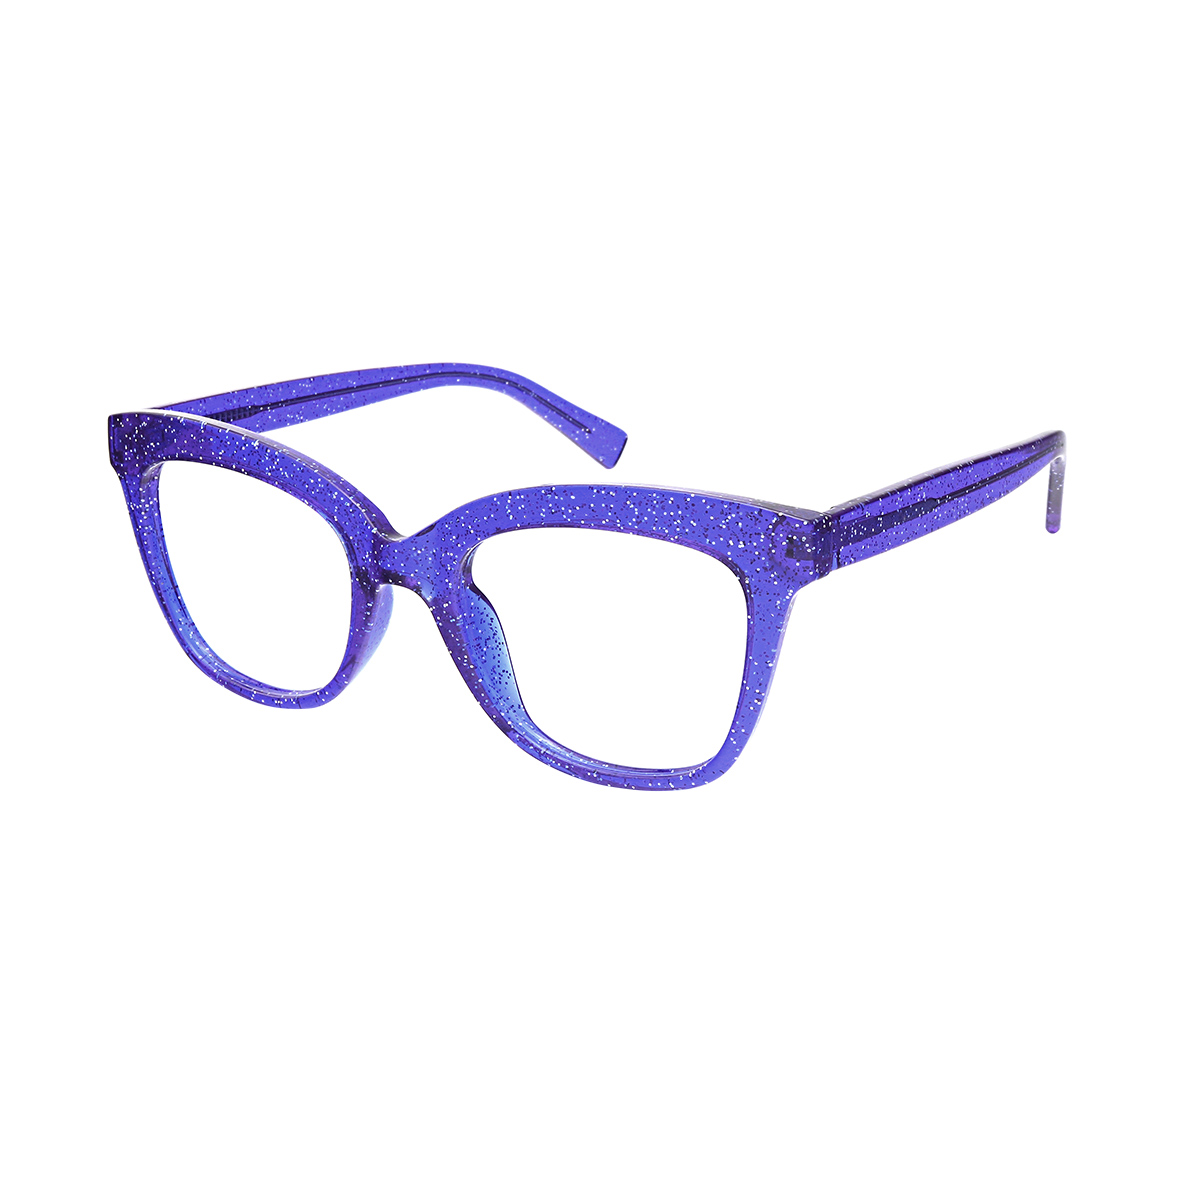 Vanessa - Square Blue/Sparkle Reading Glasses for Women